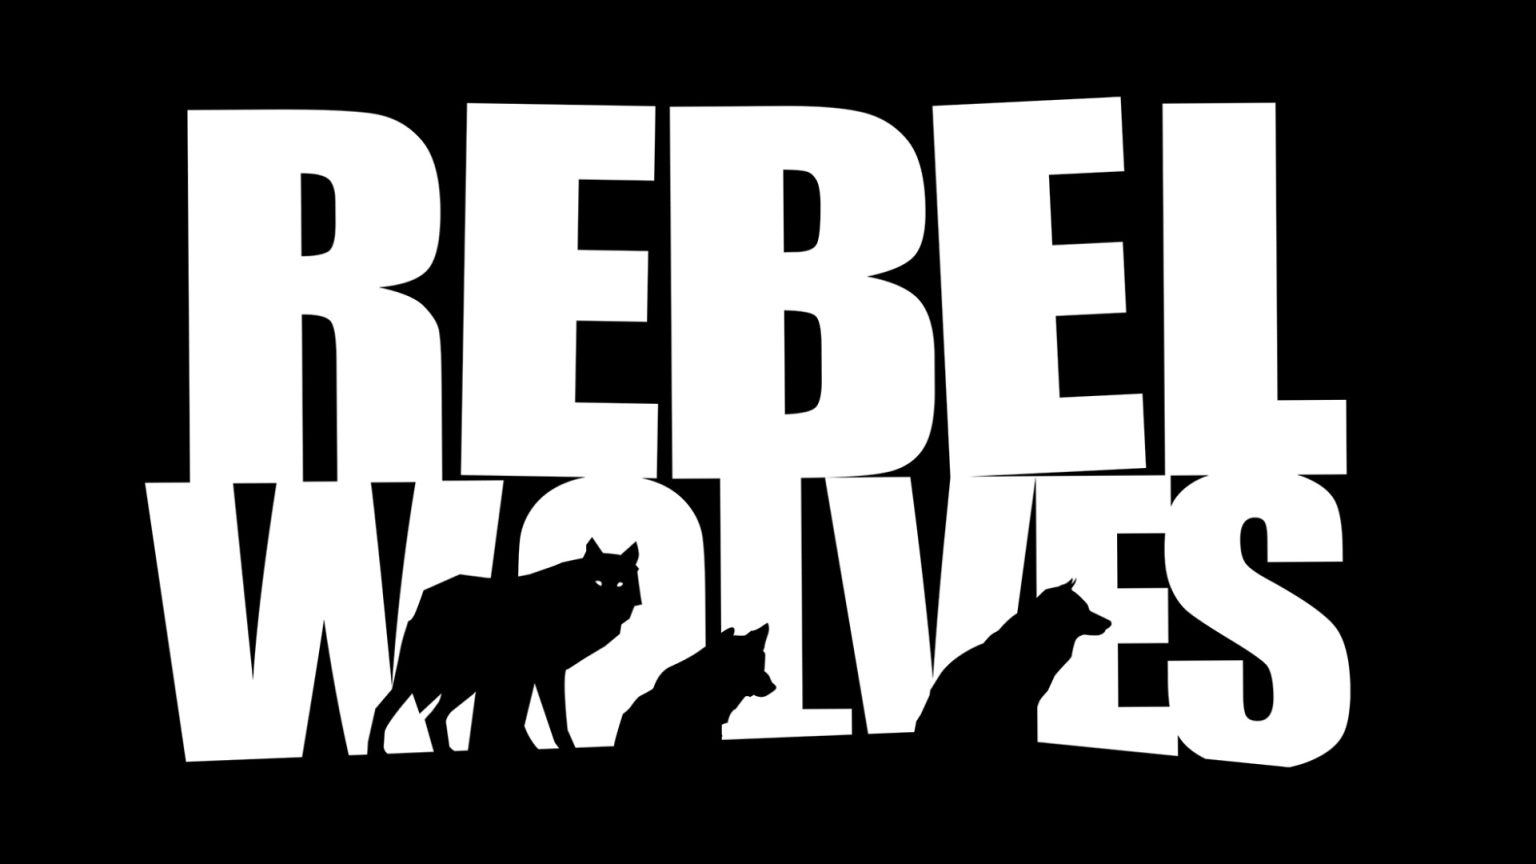 Rebel Wolves聘用《巫师3》资深人士为创意总监 3A怪异RPG开拓中